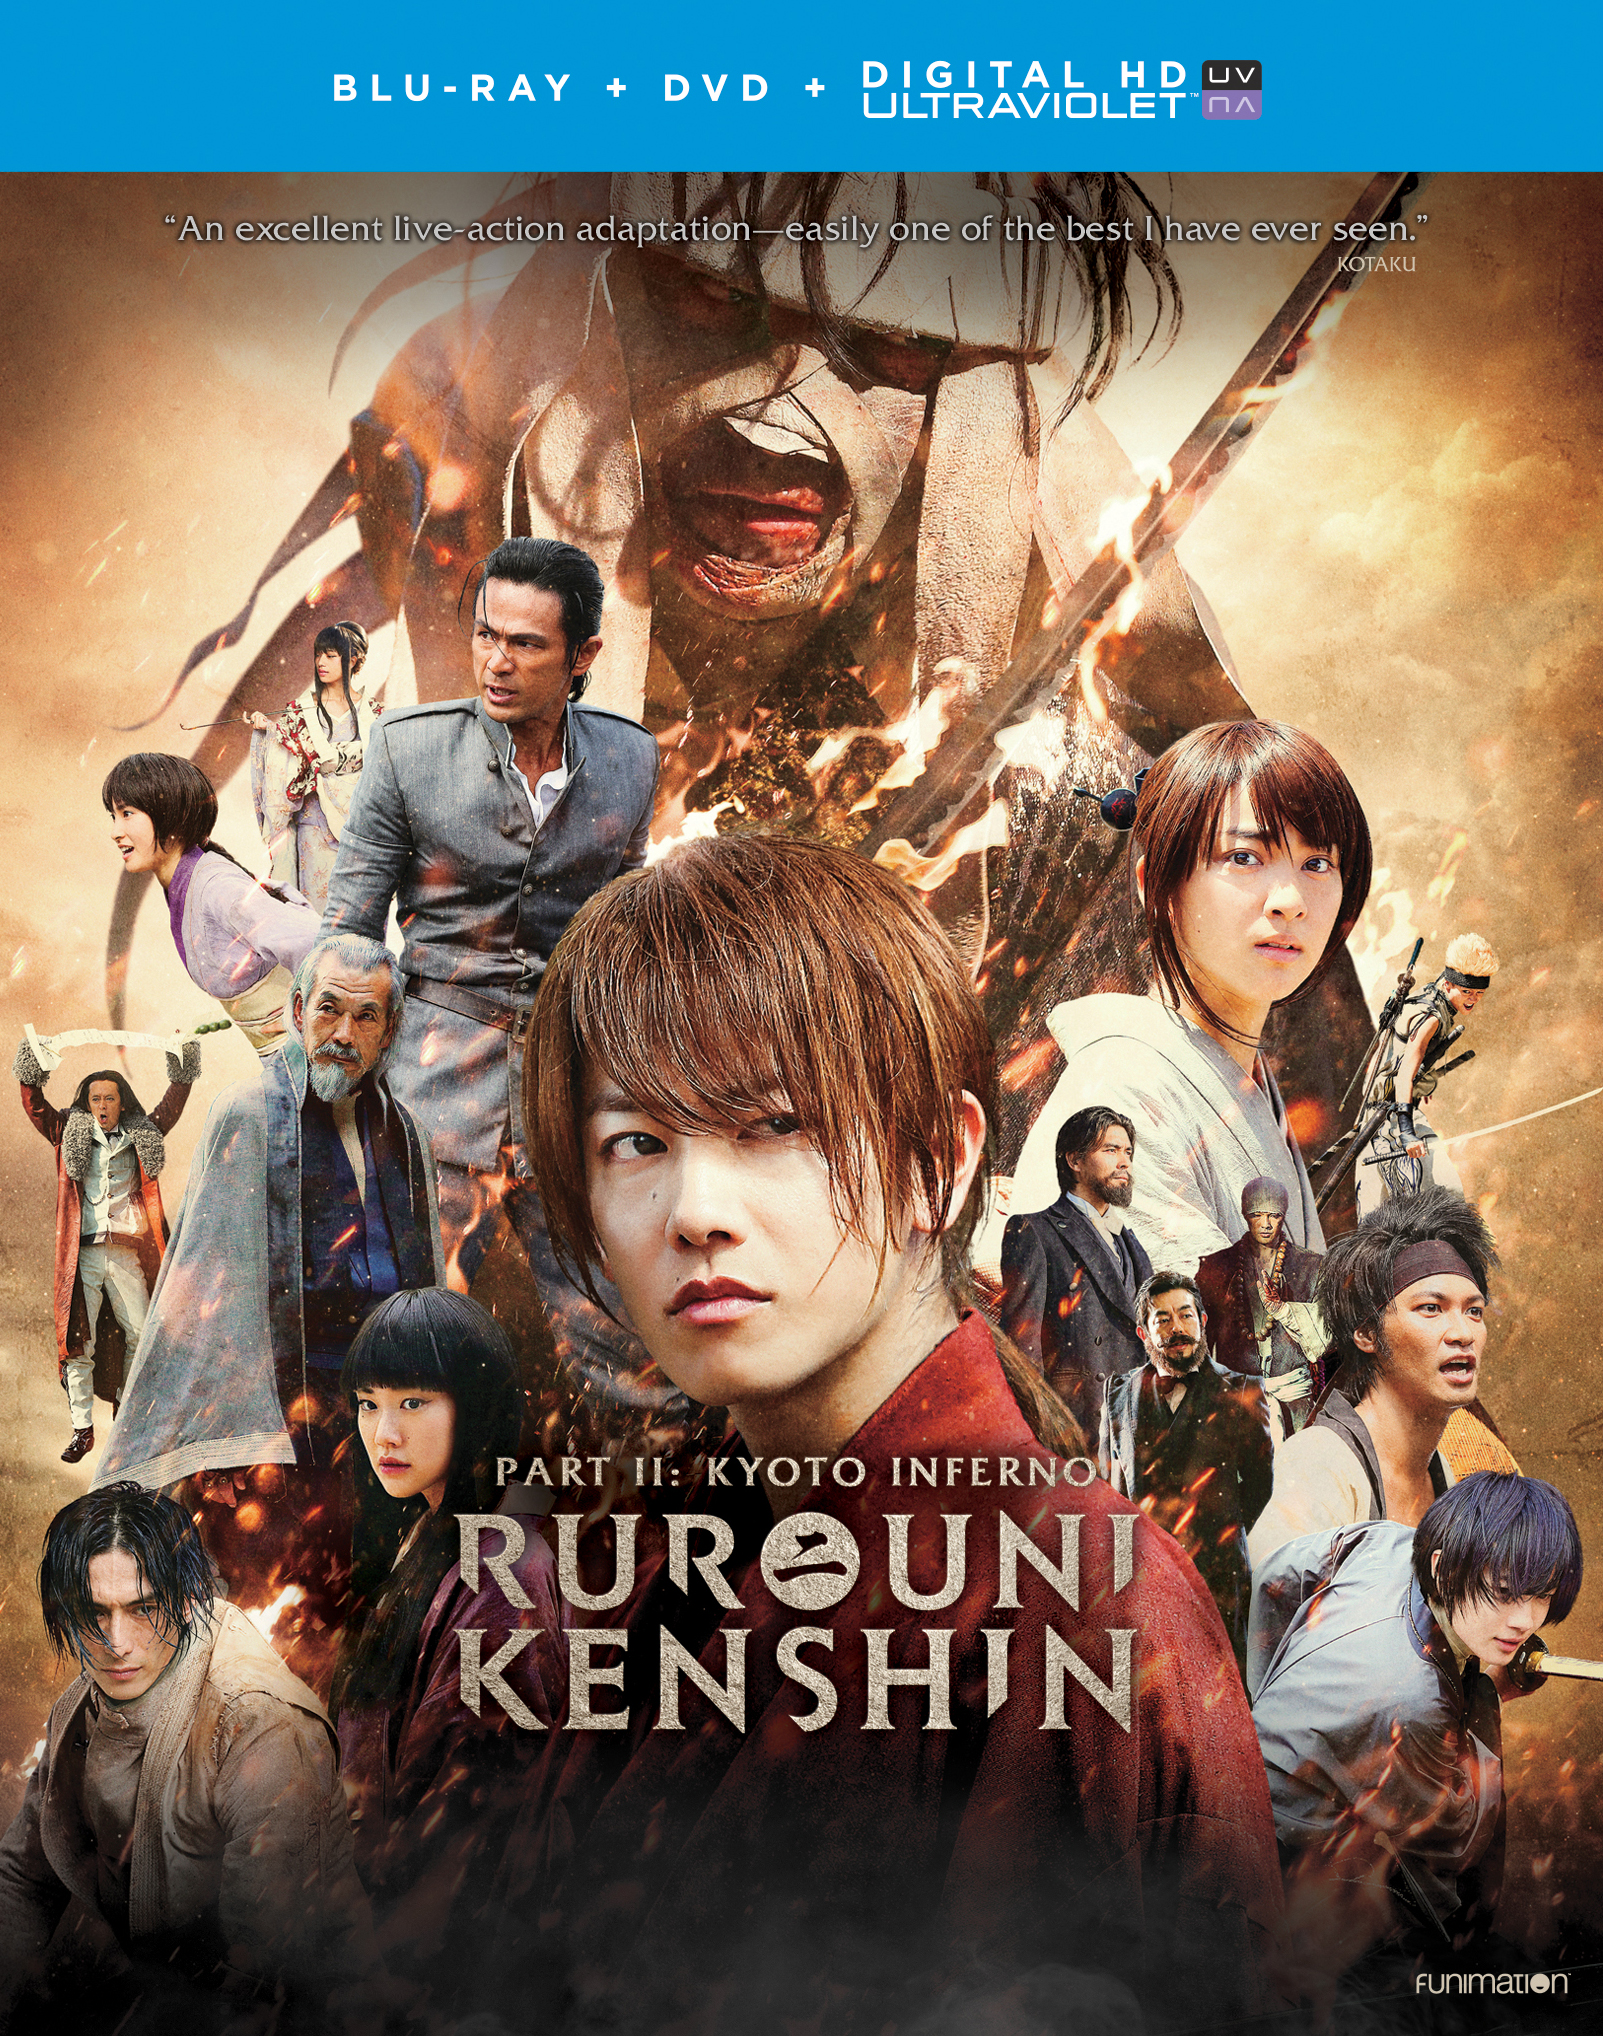 Rurouni Kenshin (anime) : themeworld : Free Download, Borrow, and Streaming  : Internet Archive